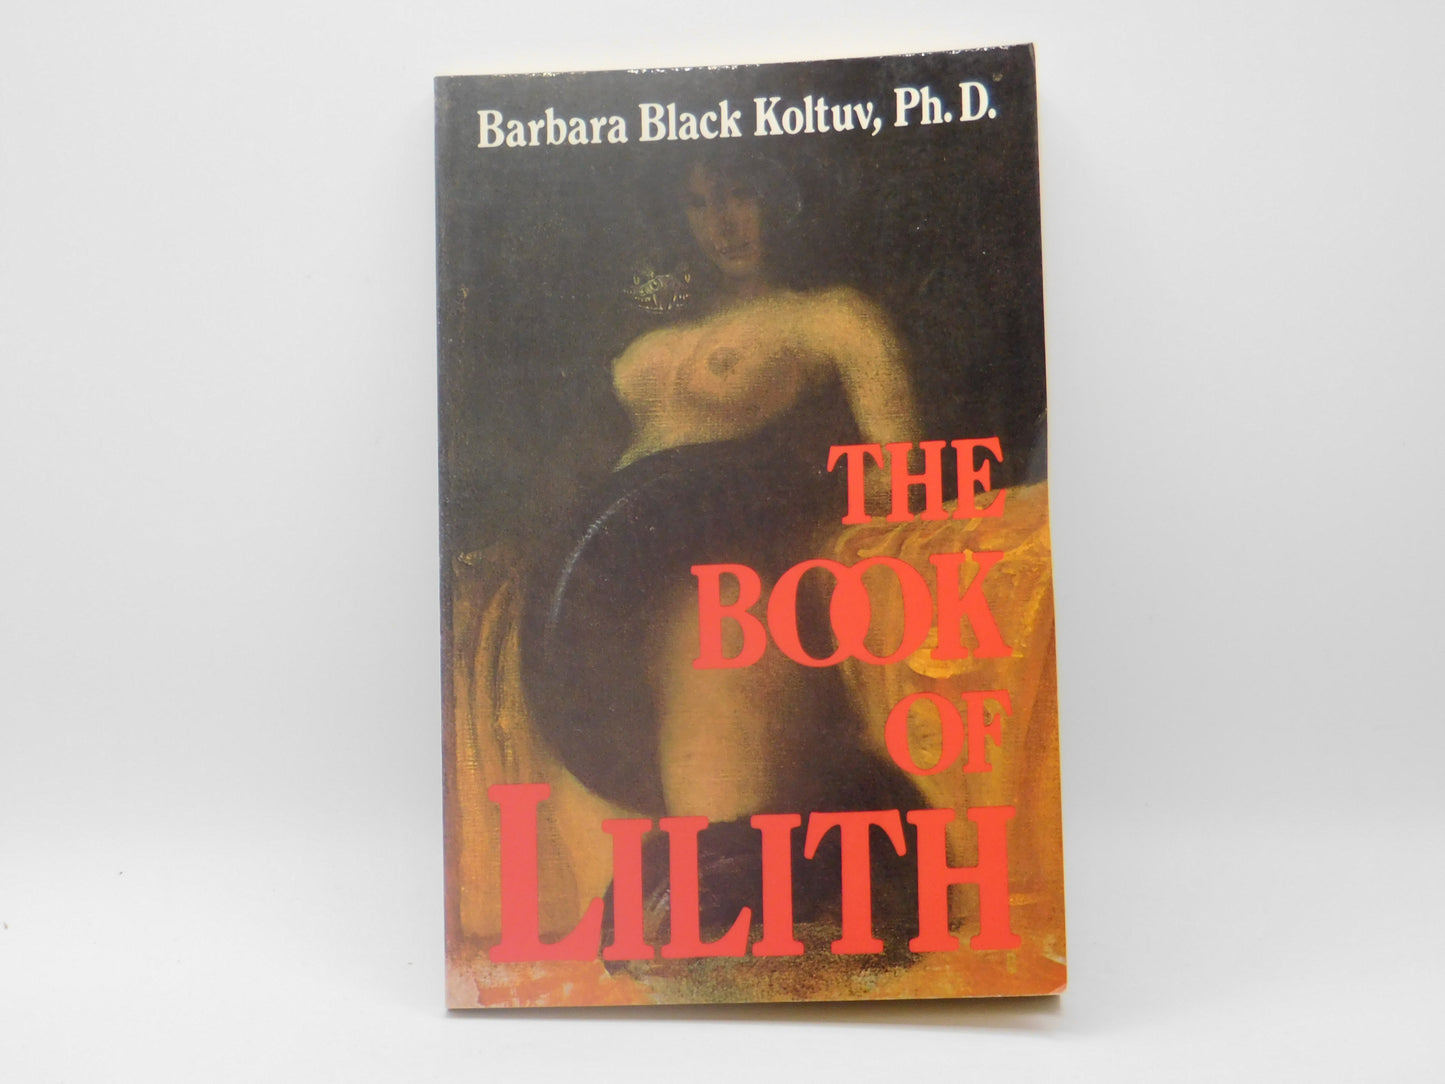 The Book of Lilith by Barbara Black Koltuv